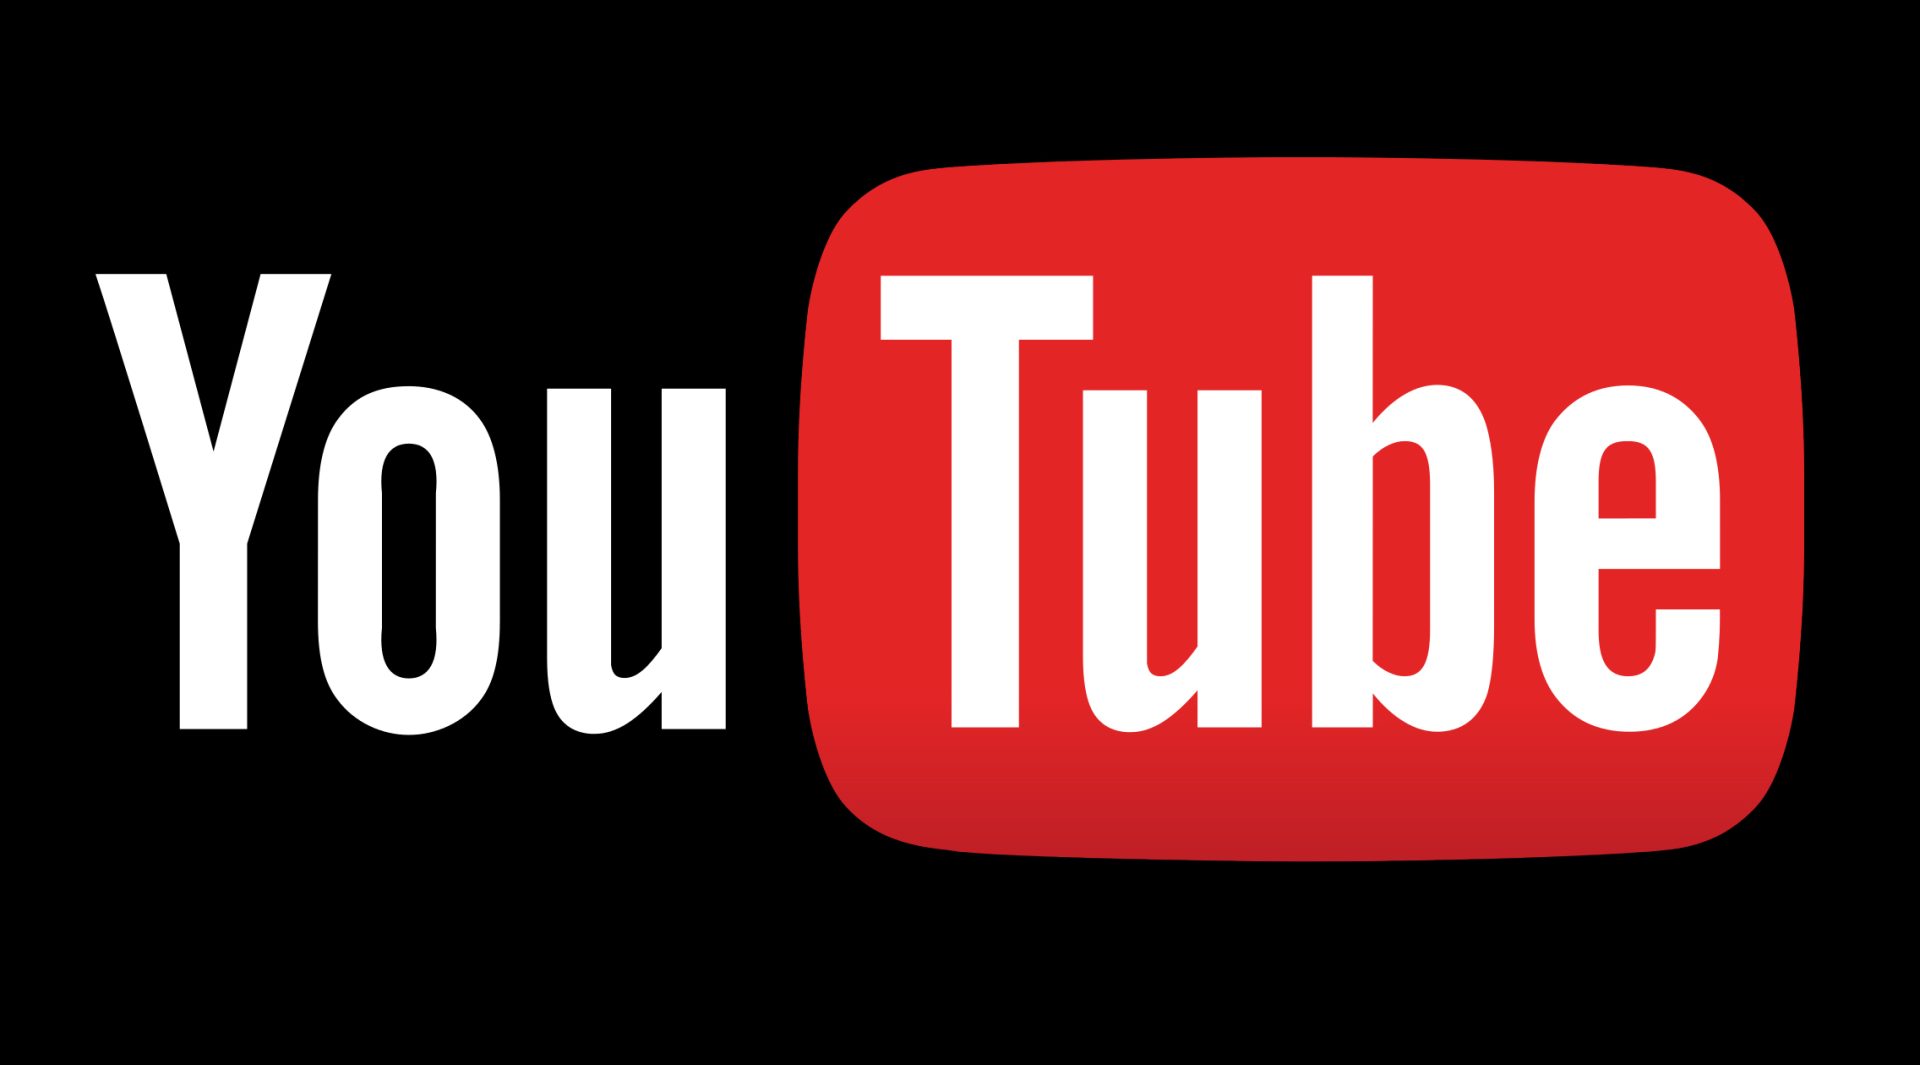 youtube logo ideas 2